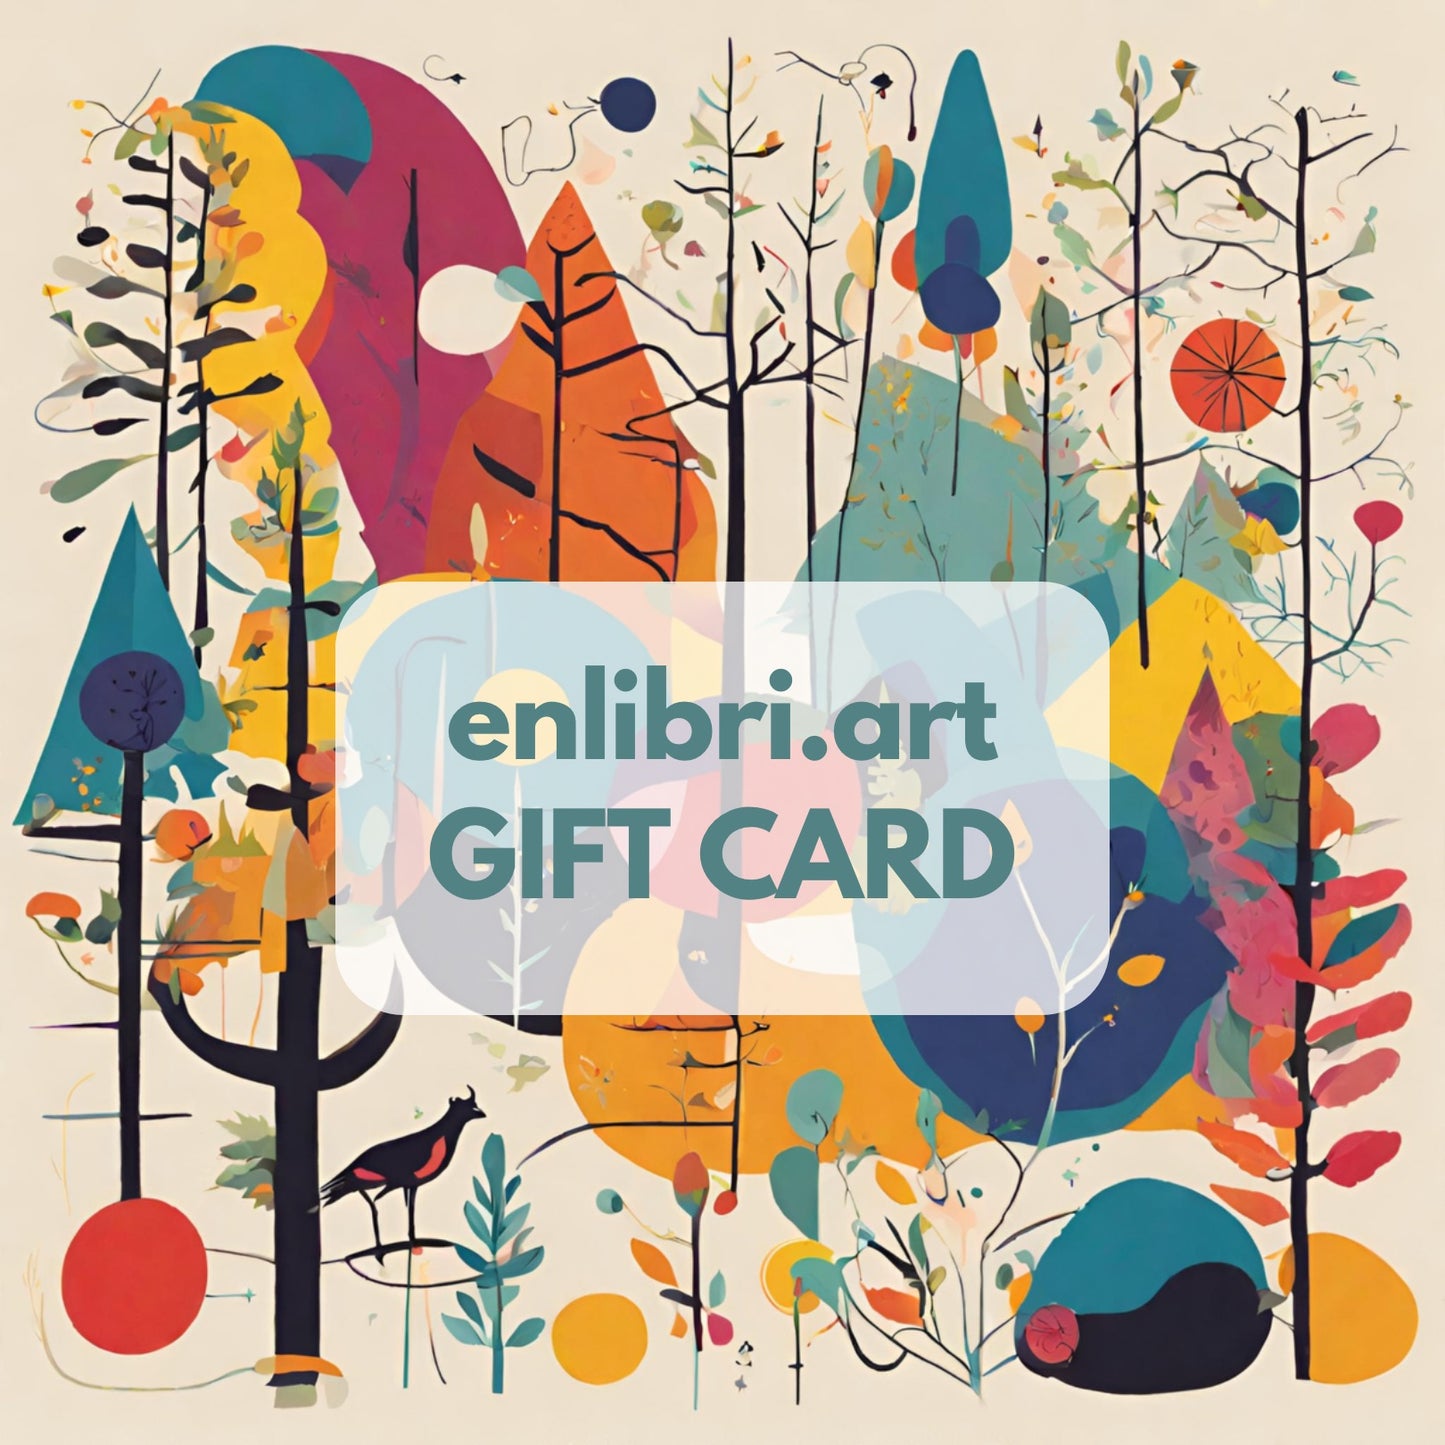 Enlibri ART GIFT card